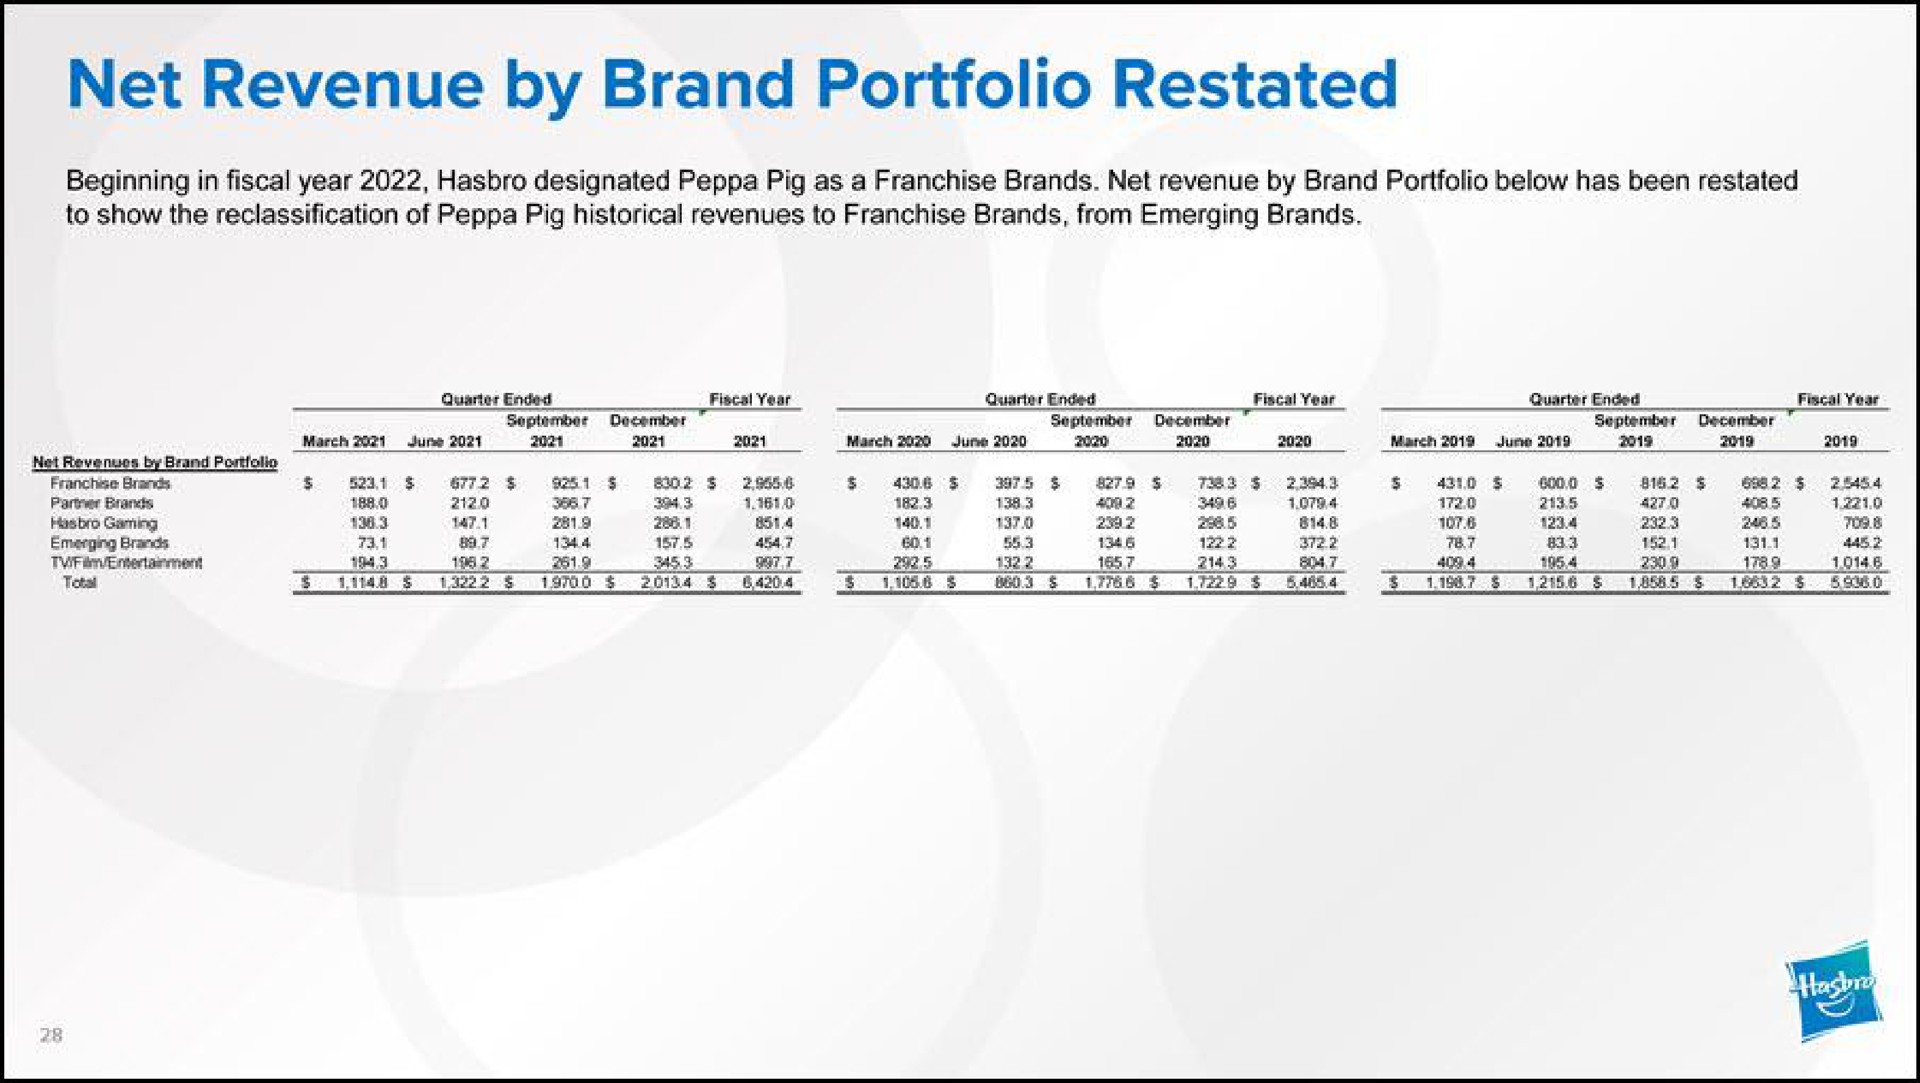 net revenue by brand portfolio restated | Hasbro